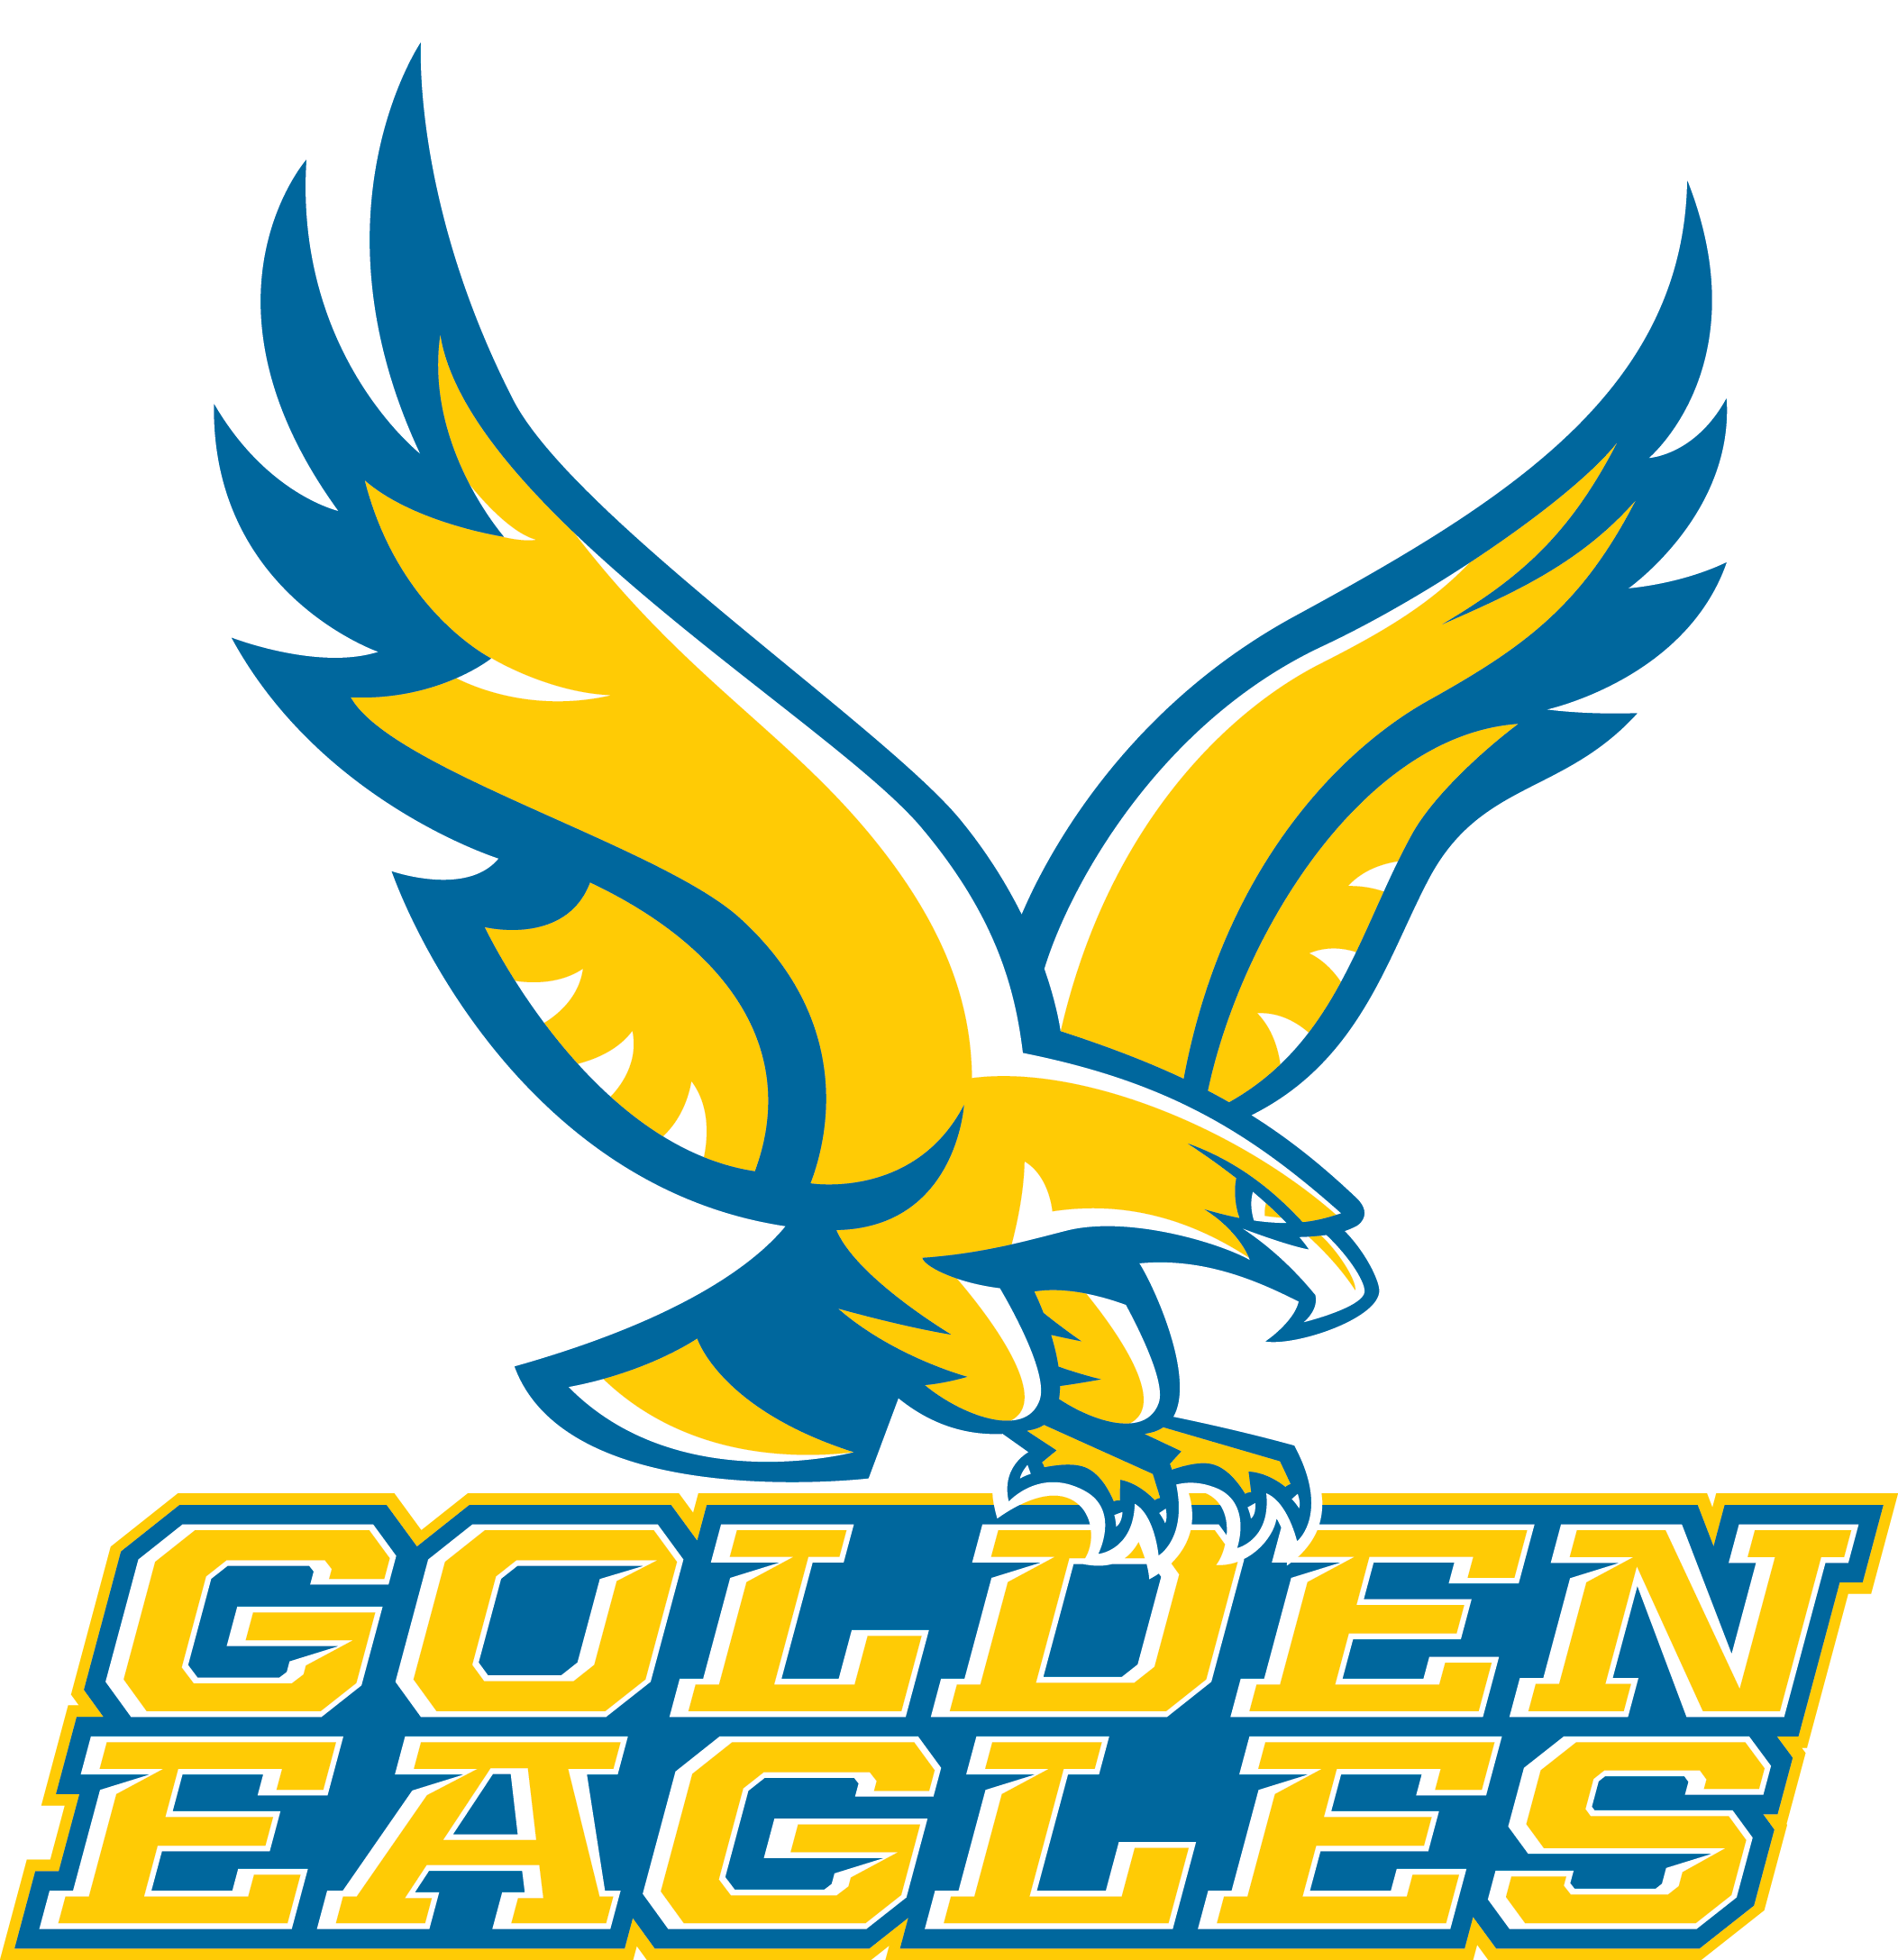 Black and Yellow Eagle Logo - Athletic Logos - About Us - Holy Family Catholic Schools